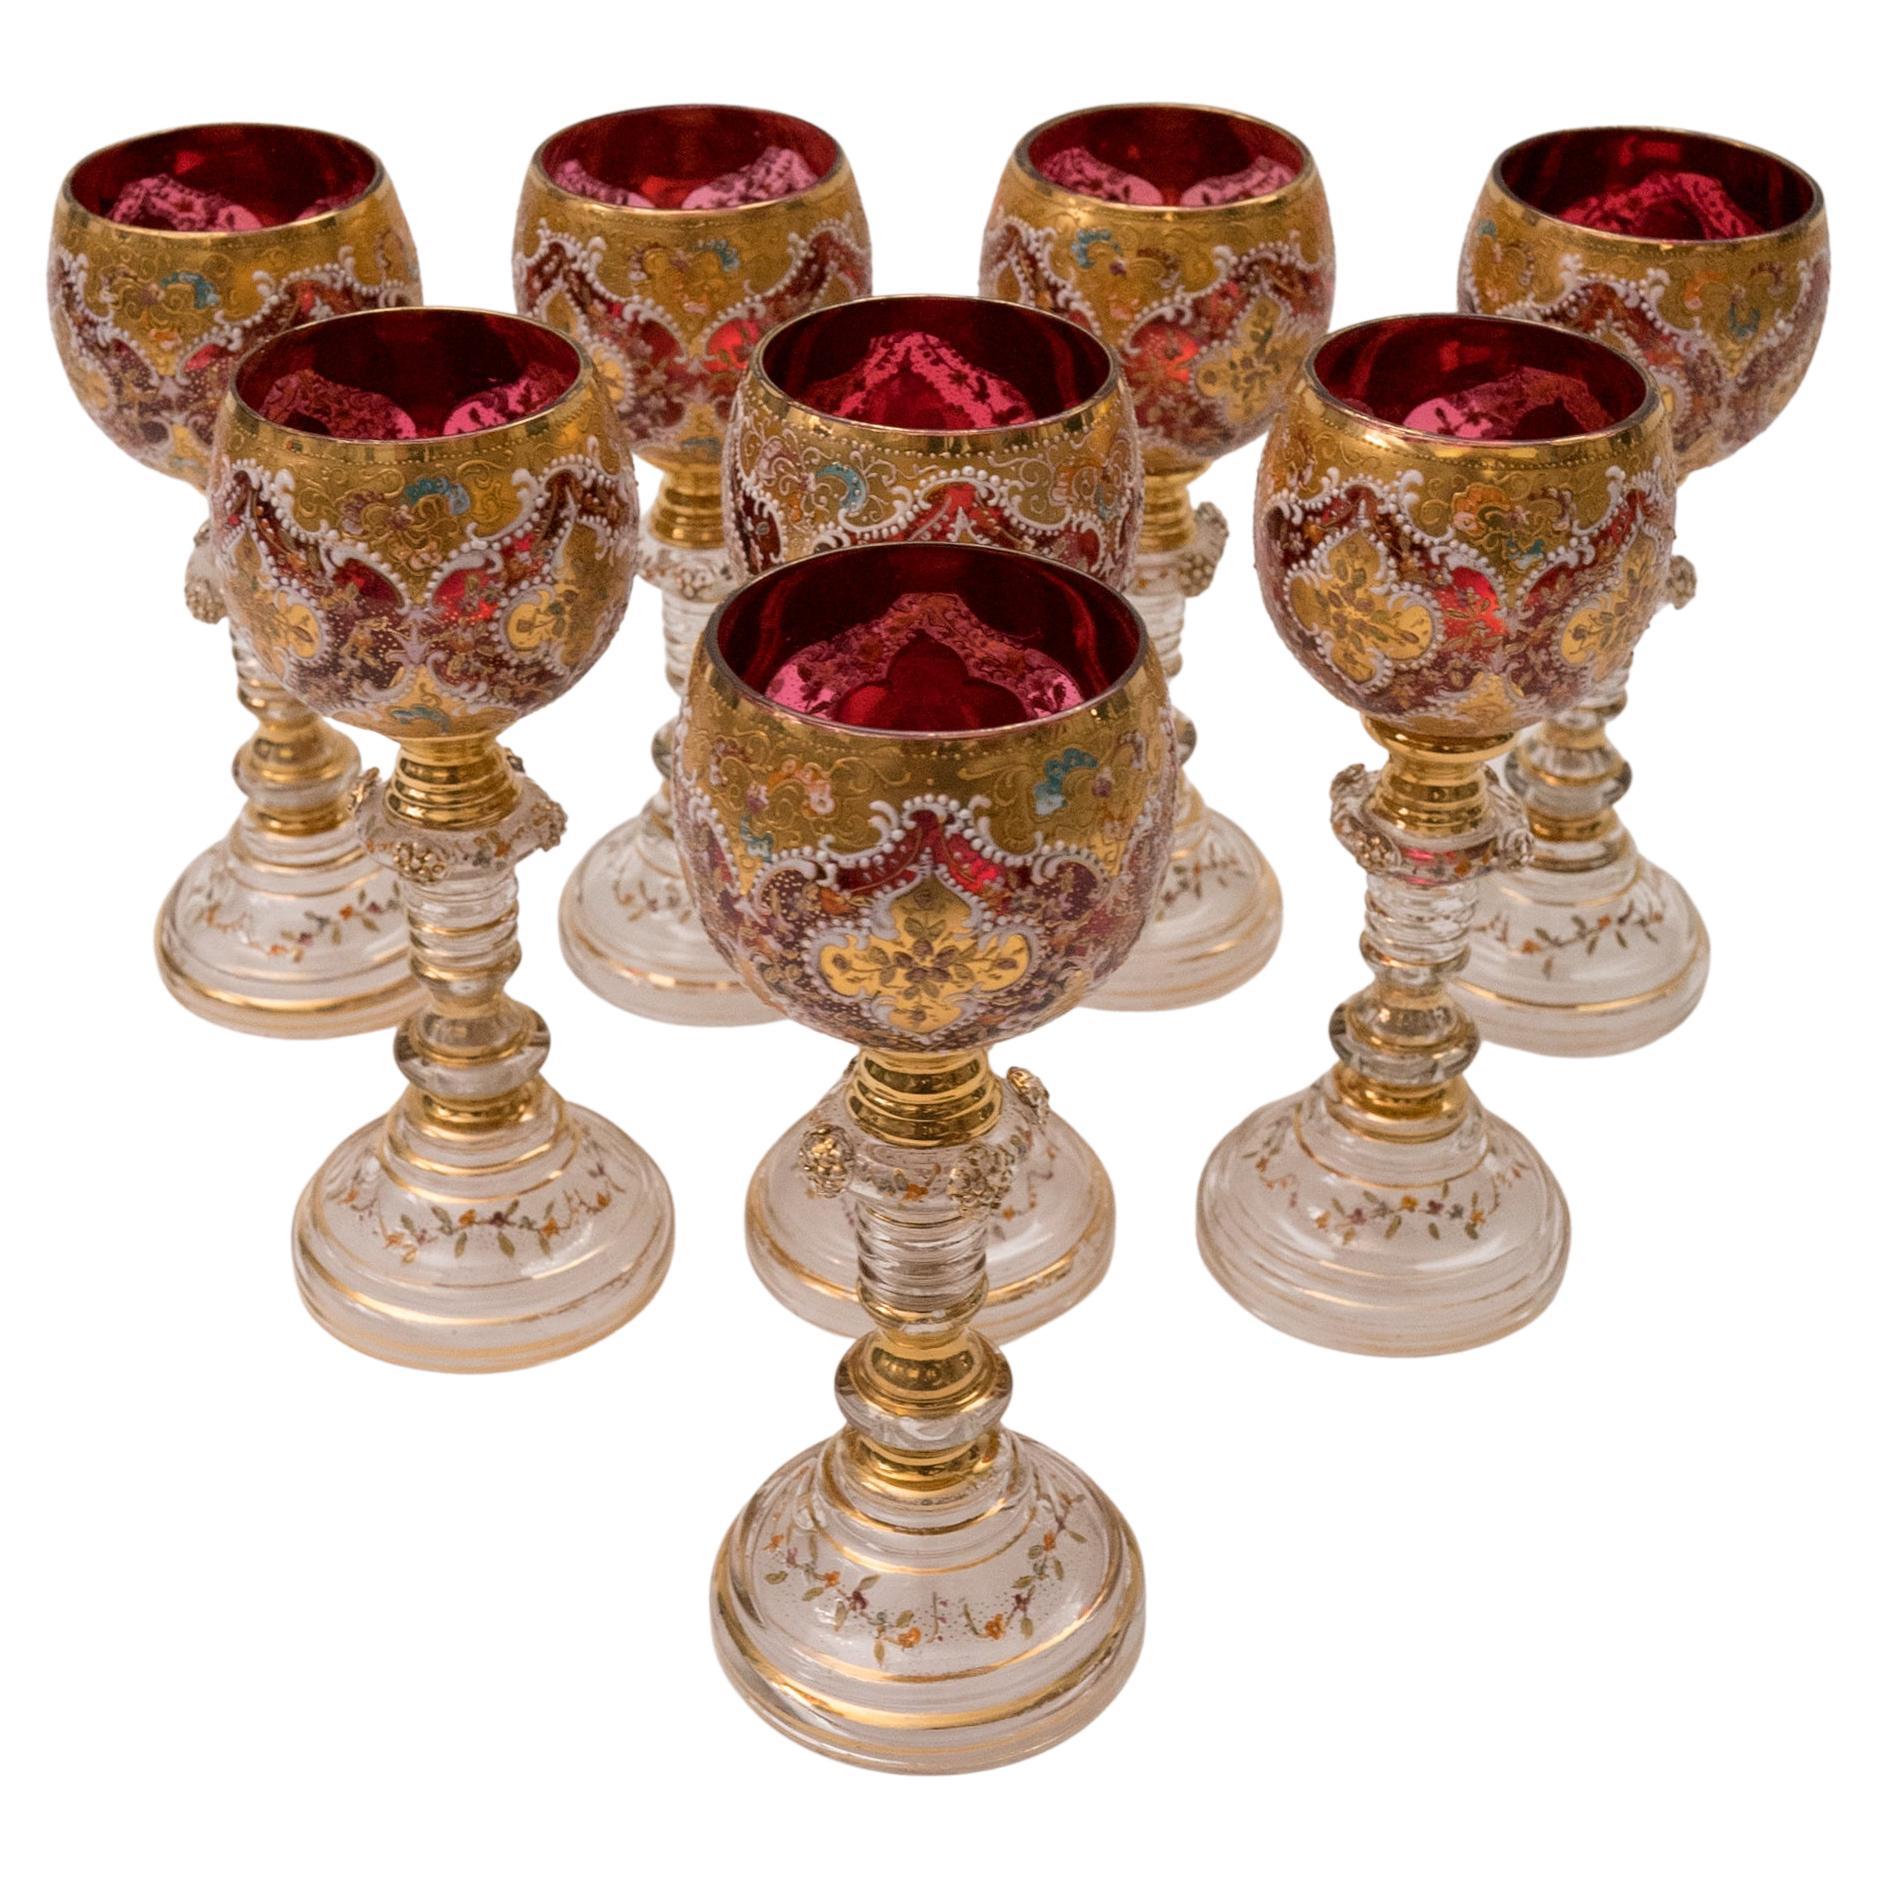 8 Exquisite Antique Wine Goblets, Moser Circa 1880, Ruby Color Detailed Enamel